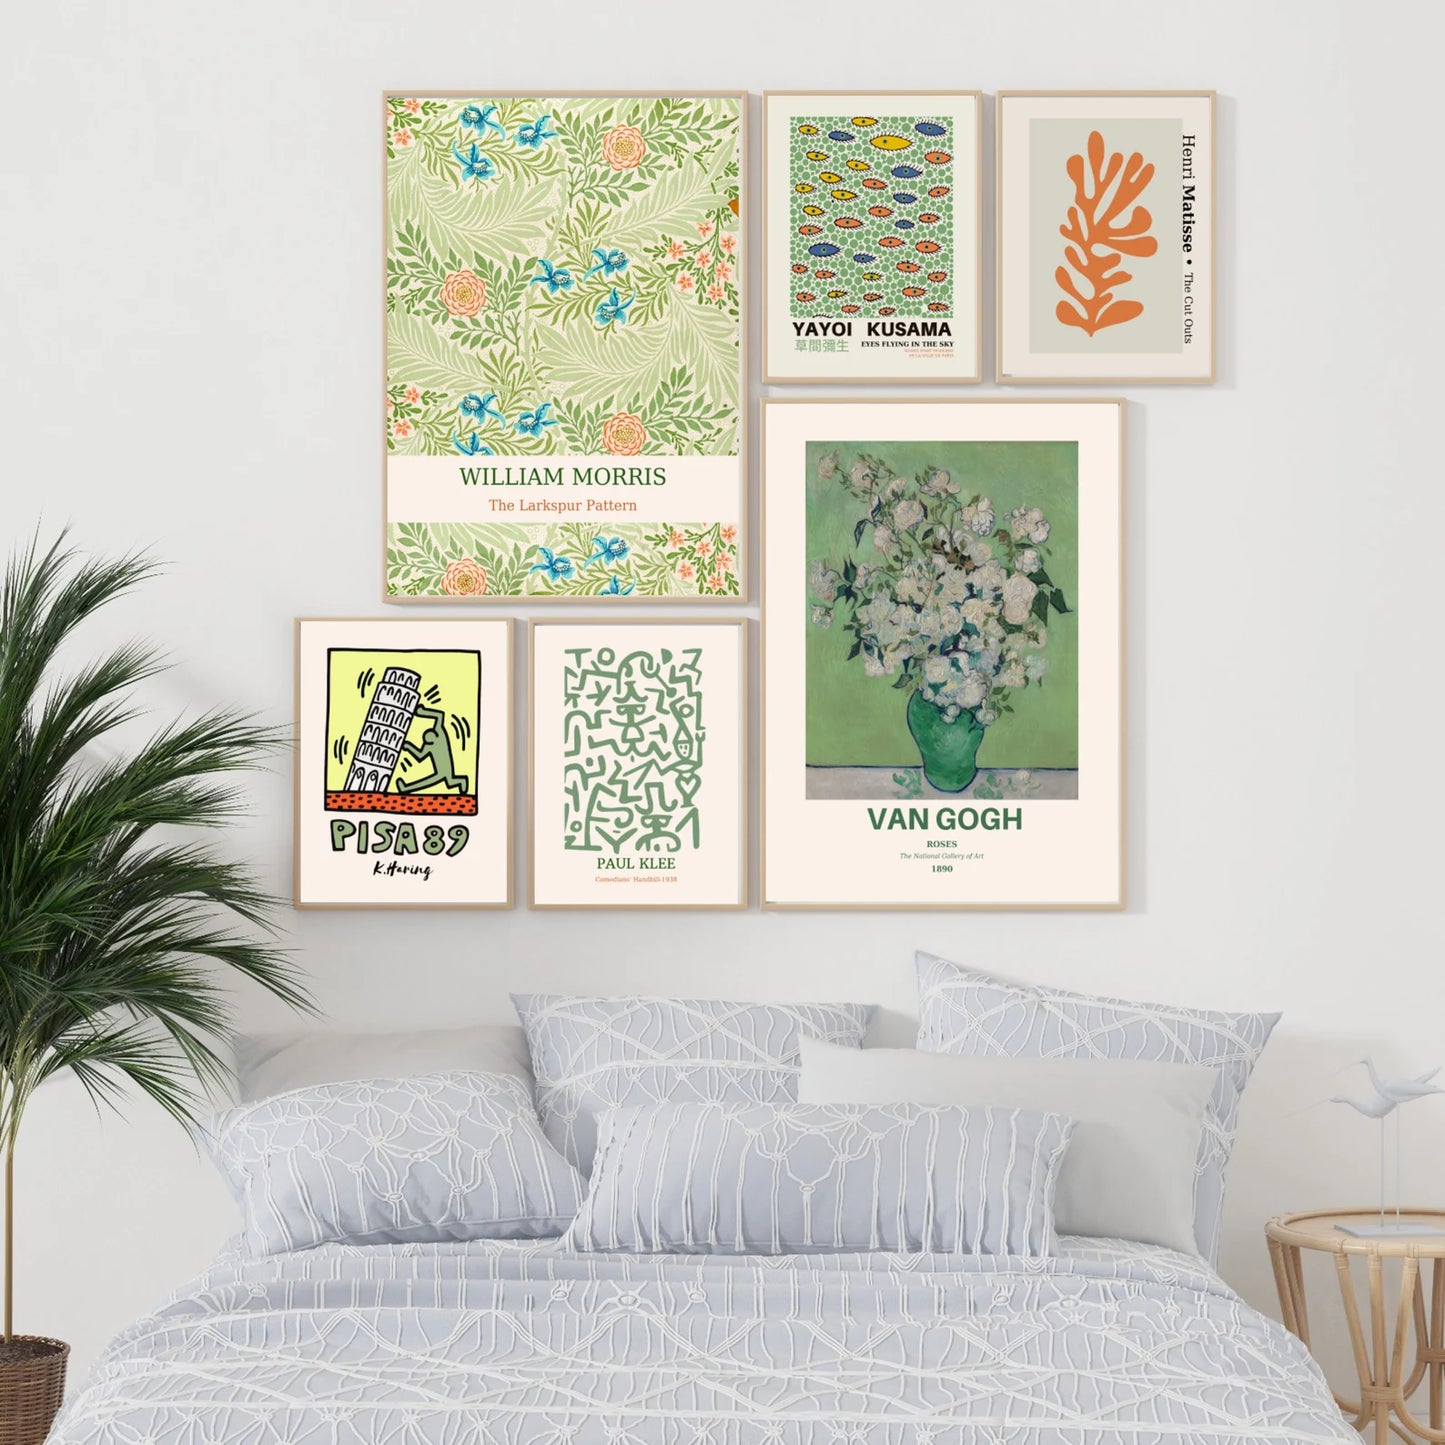 Gallery Wall Set, Yayoi Kusama Print, Matisse Poster Set, Keith Haring Print, Sage Green Decor, Van Gogh Art, Matisse Print, Digital Set